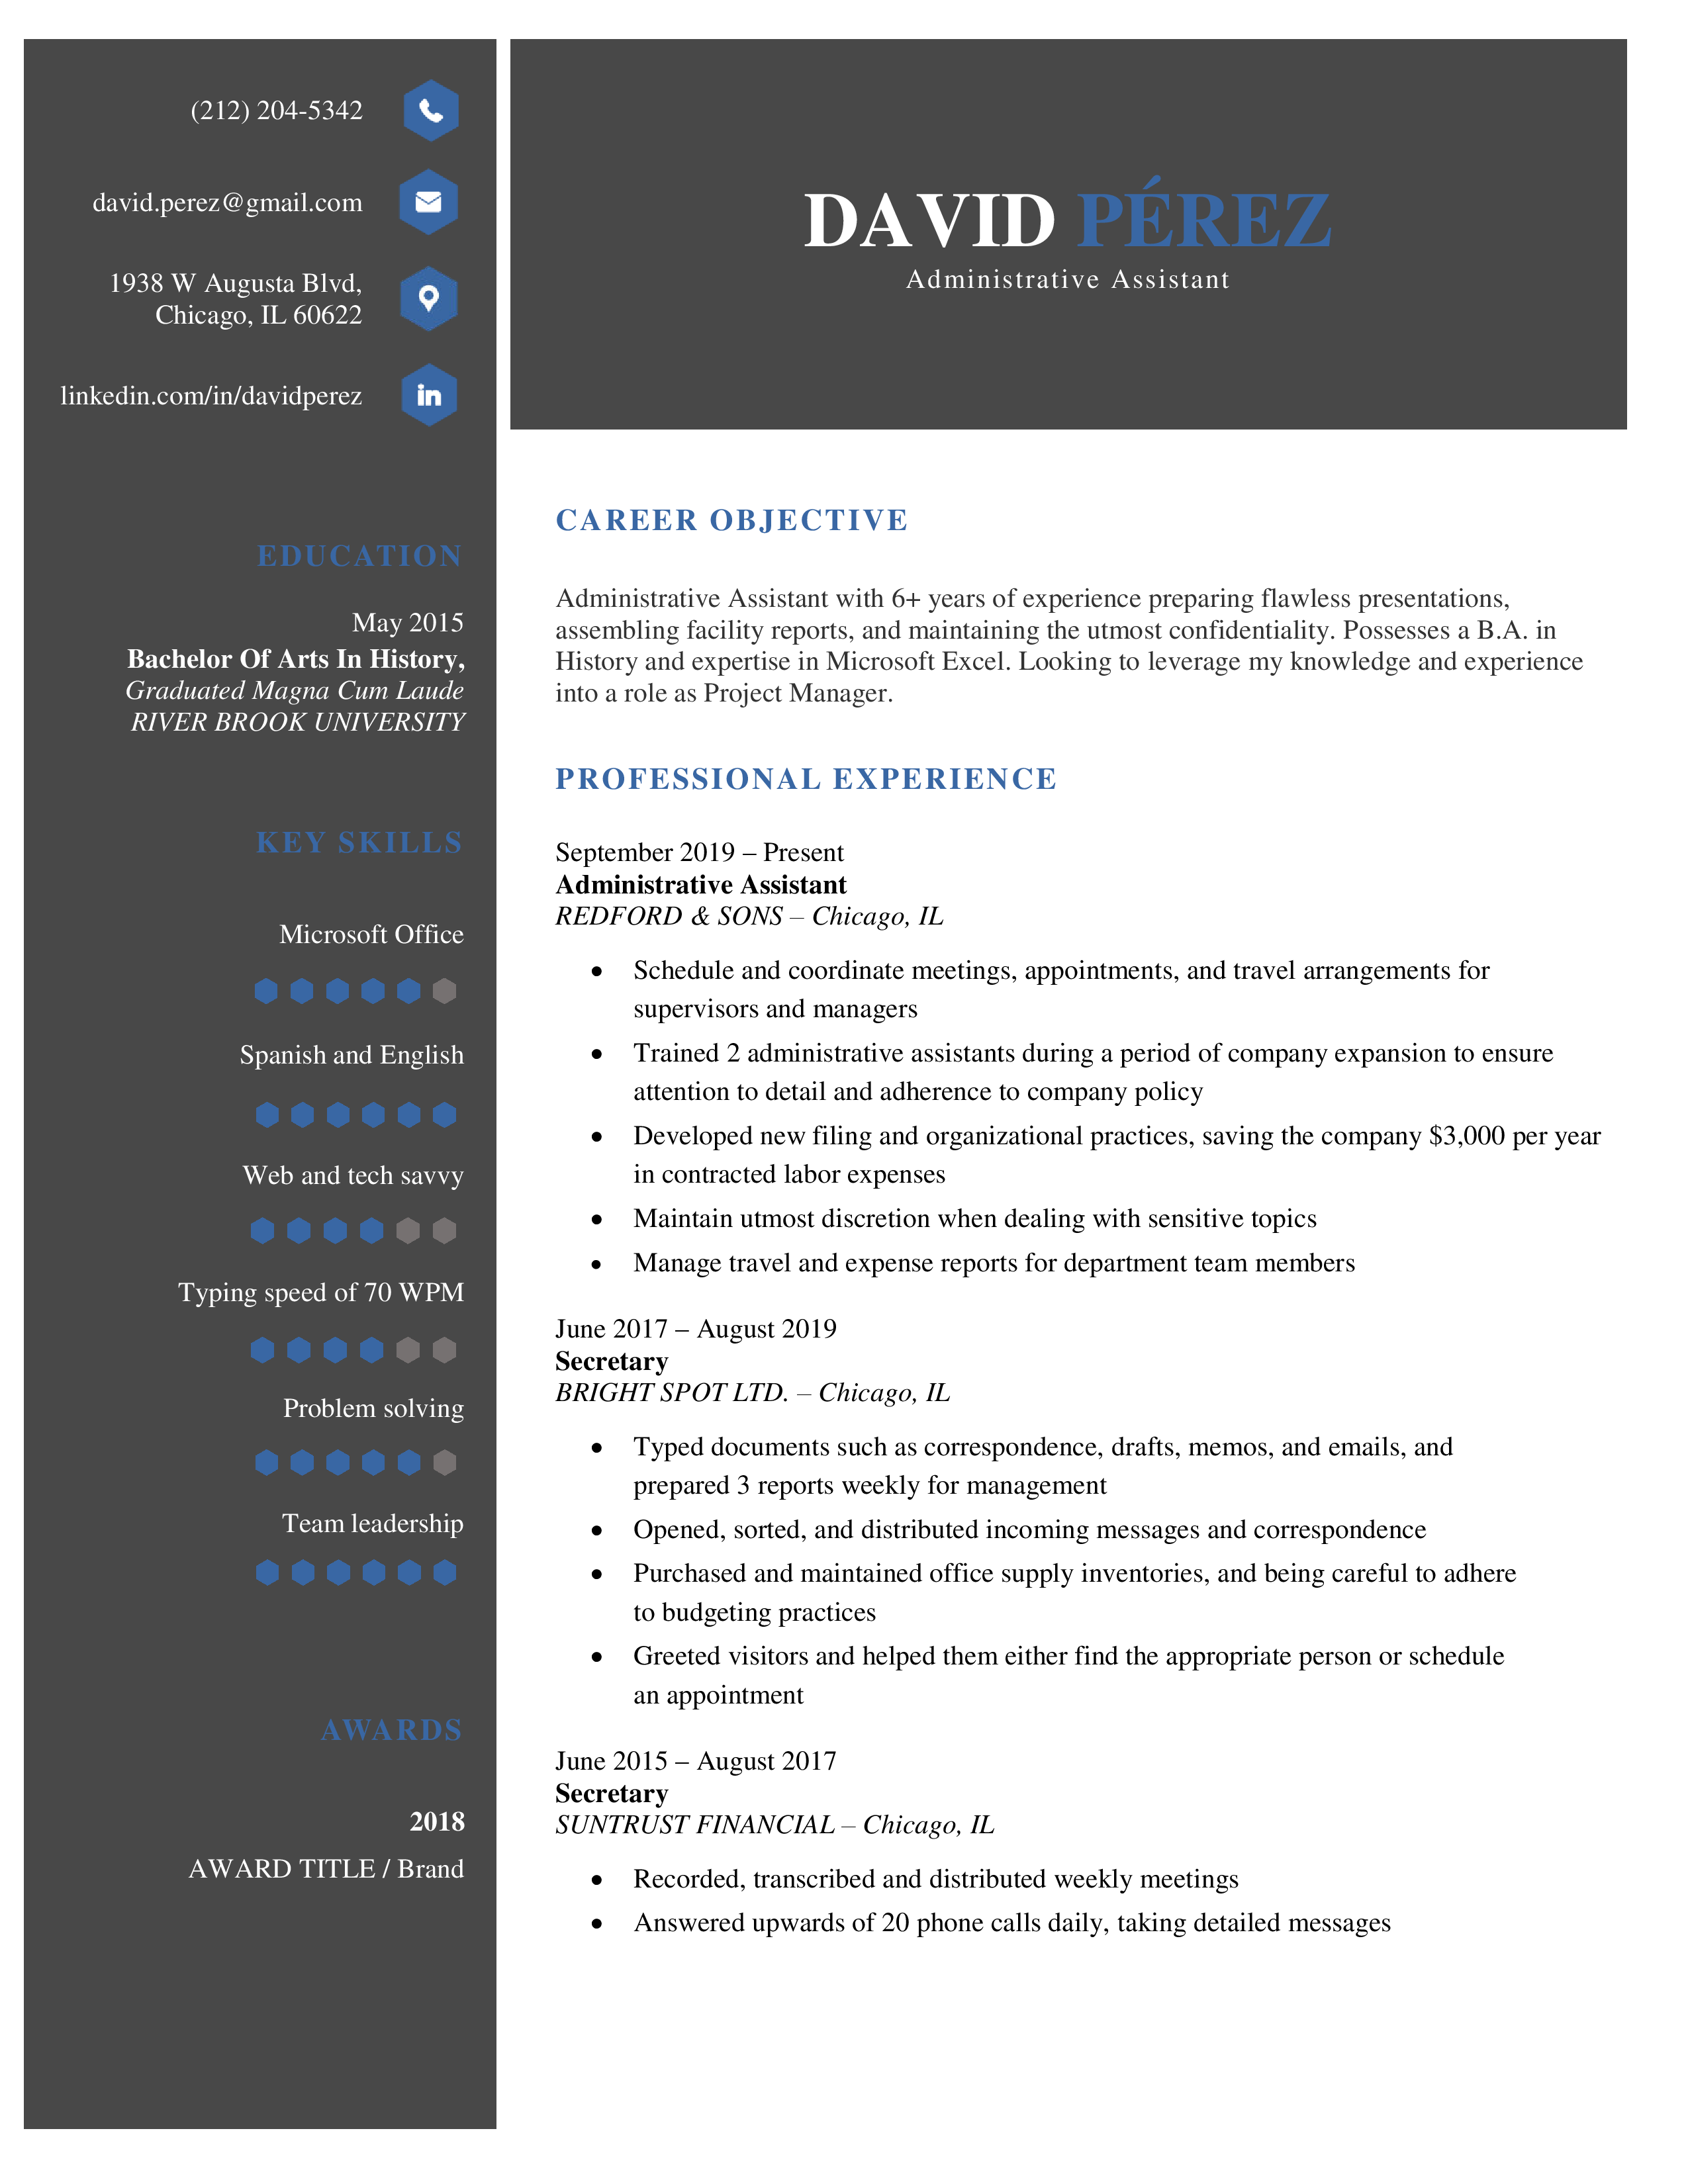 Everest-Resume-Template-Blue